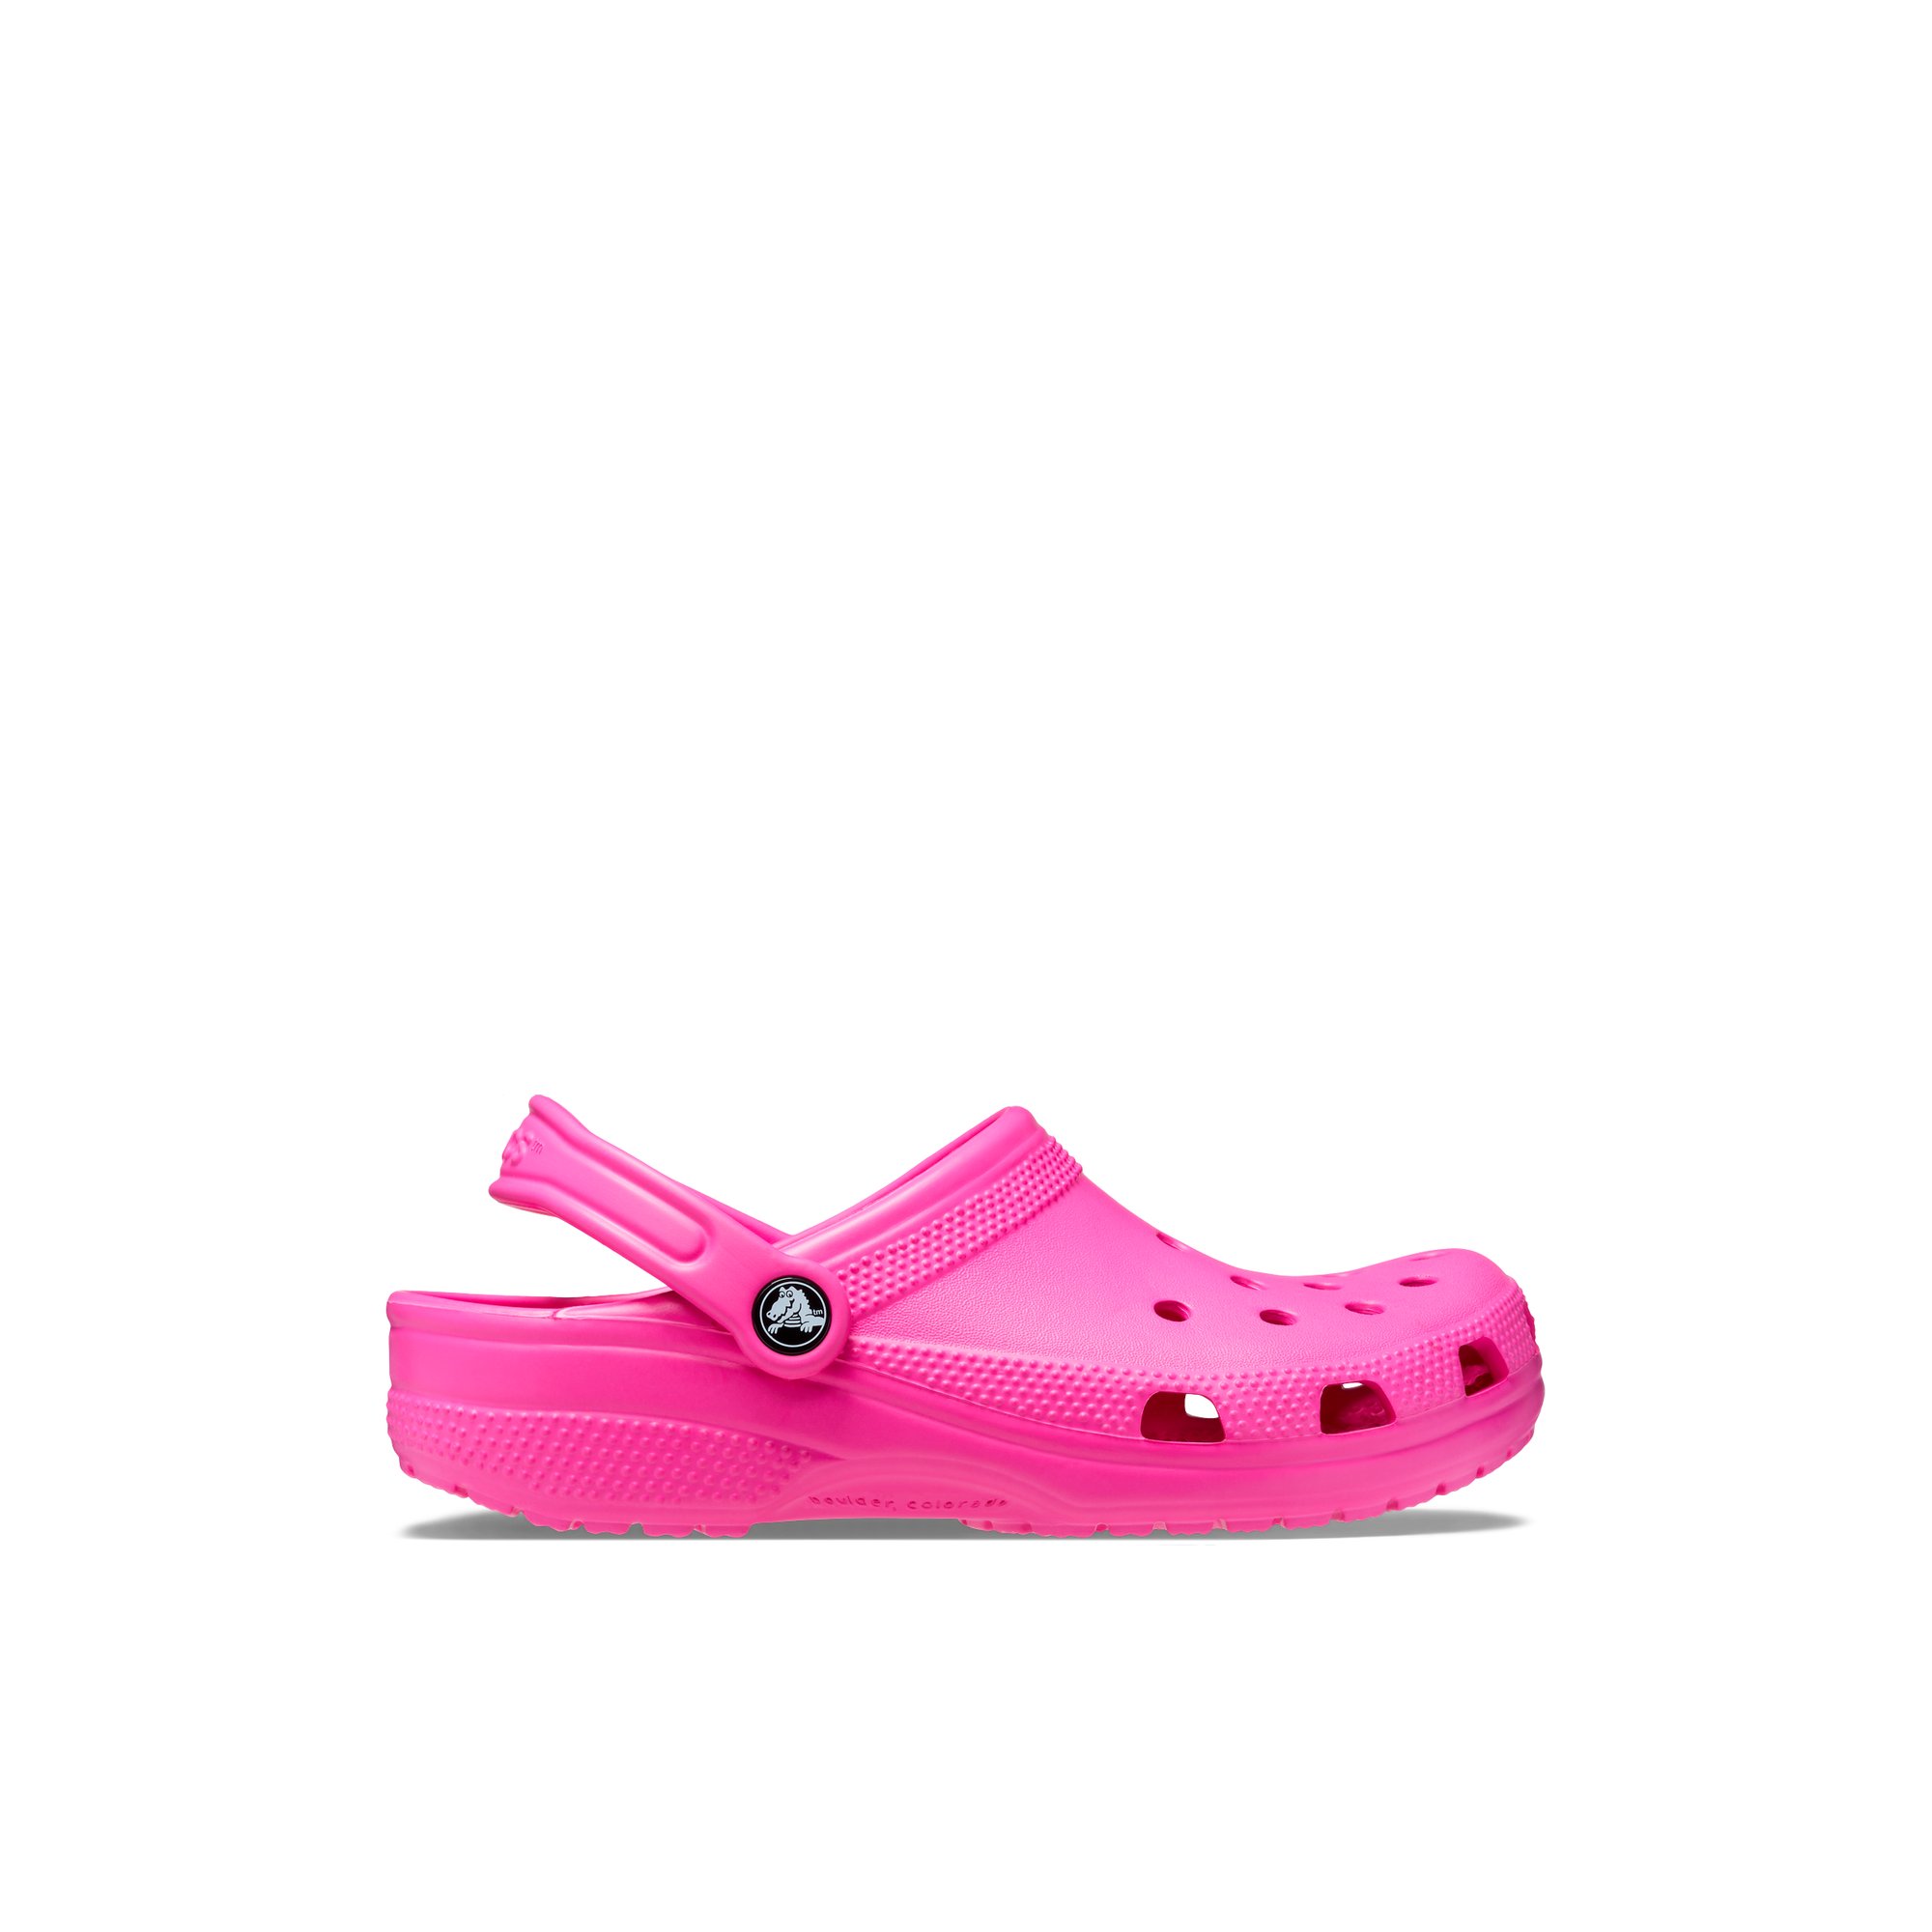 Crocs Classic - Women's Footwear Sandals Flats